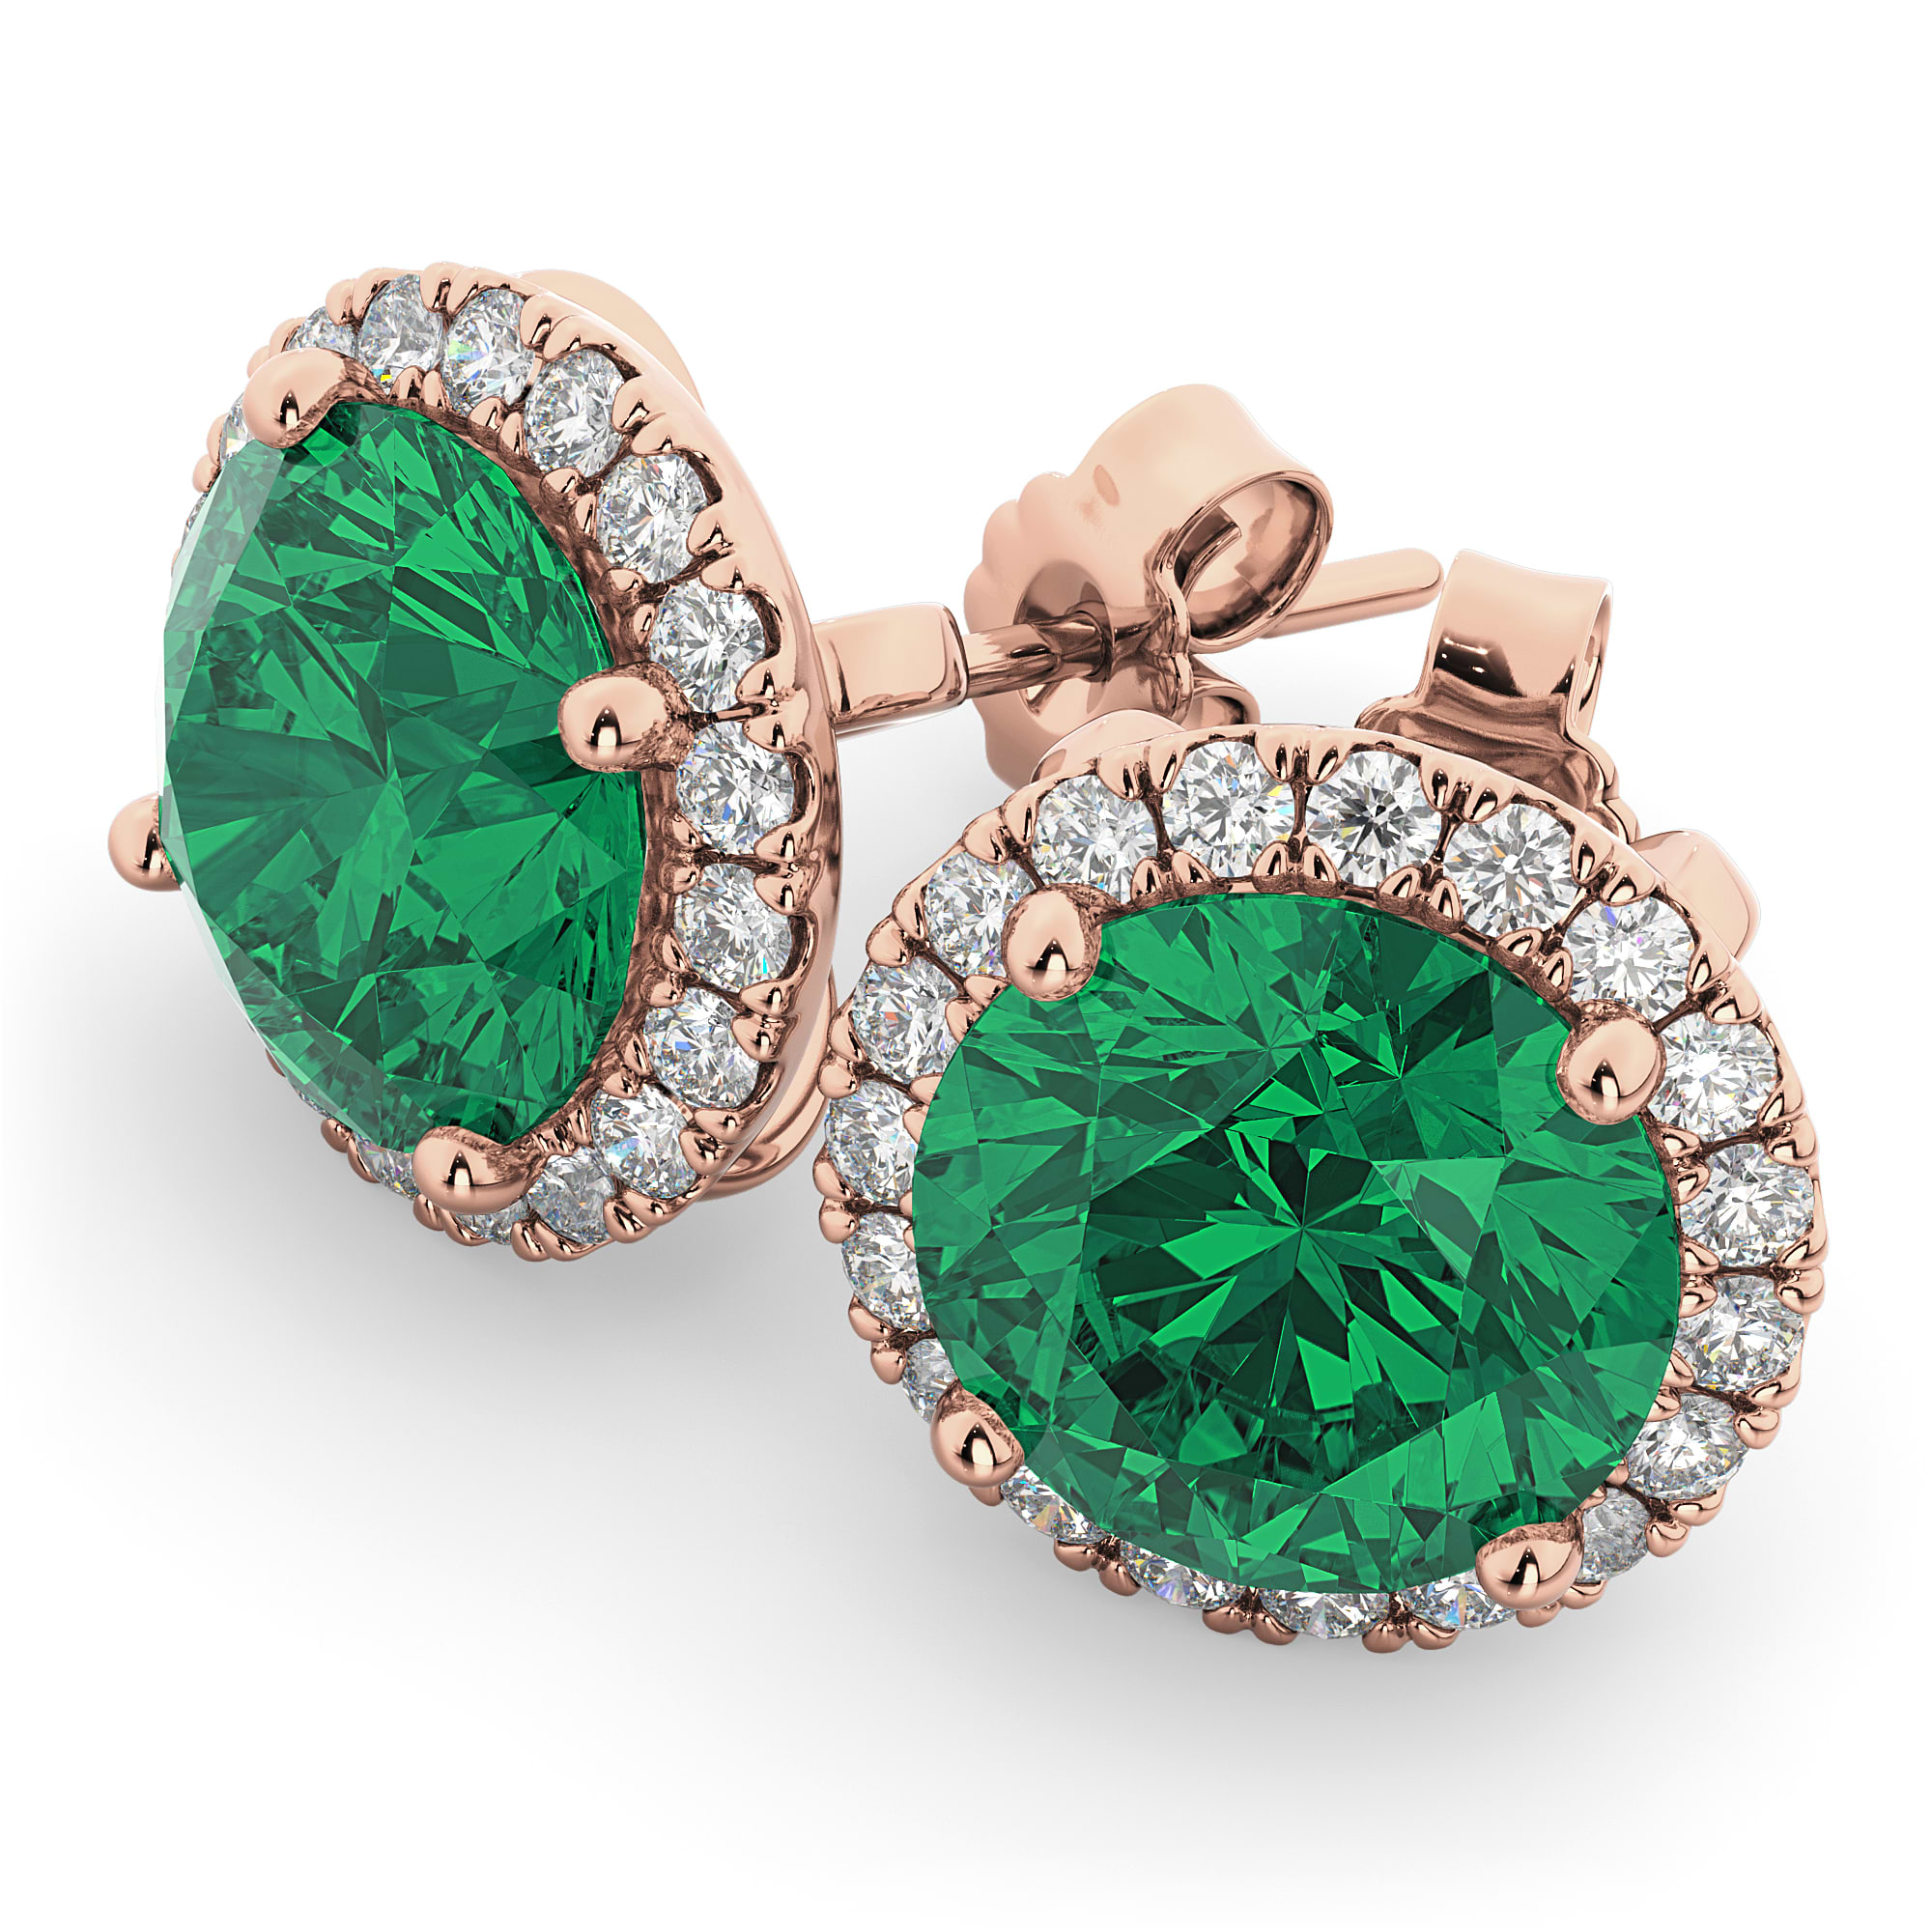 Halo Round Emerald & Diamond Earrings 14k Rose Gold (4.97ct)